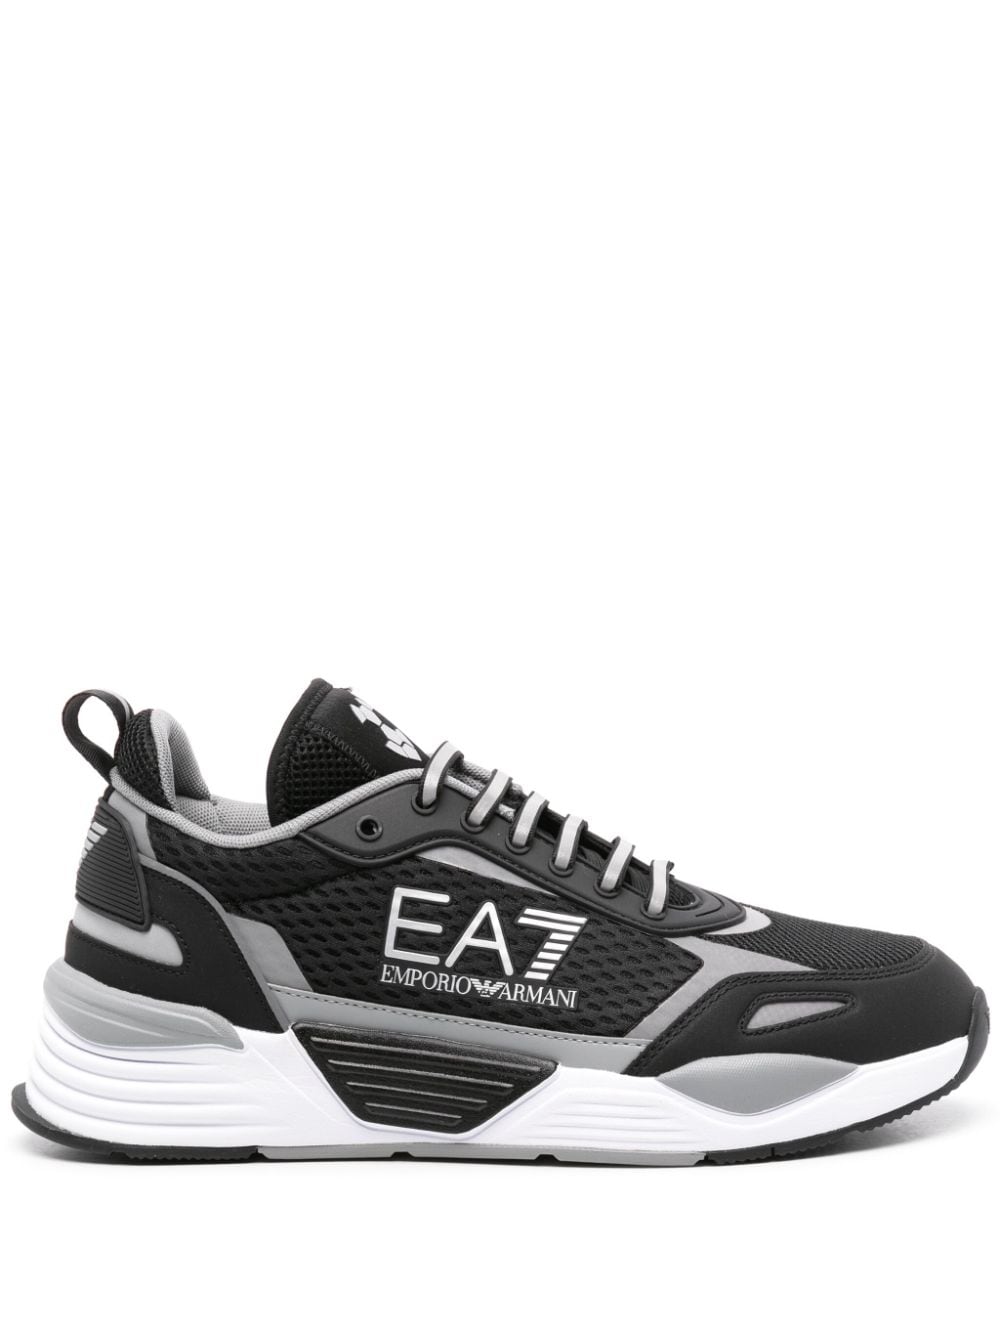 Ea7 Emporio Armani Ace Runner chunky sneakers Black